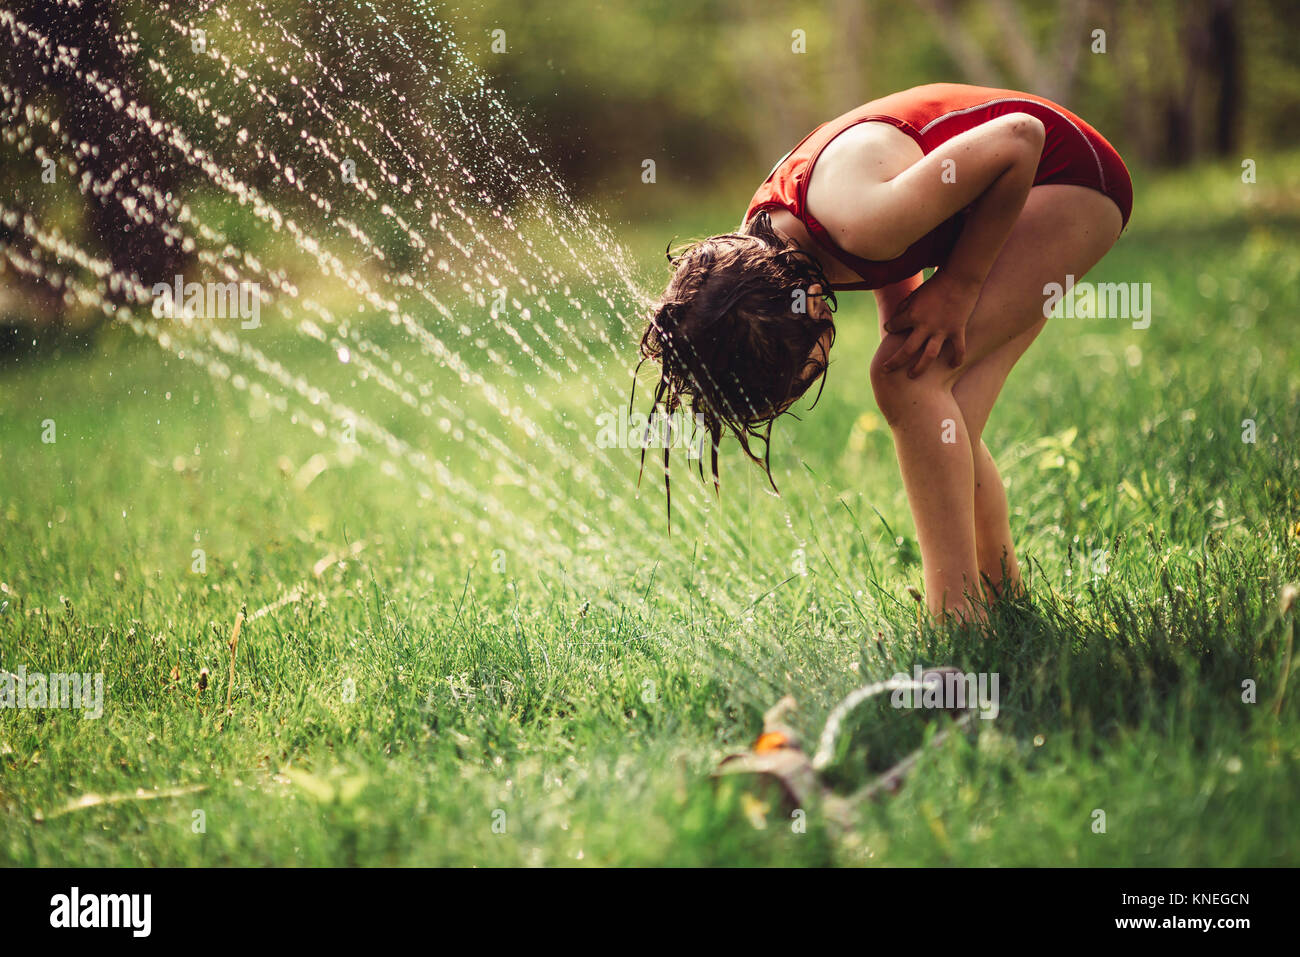 Girl playing in a sprinkler in the backyard Stock Photo